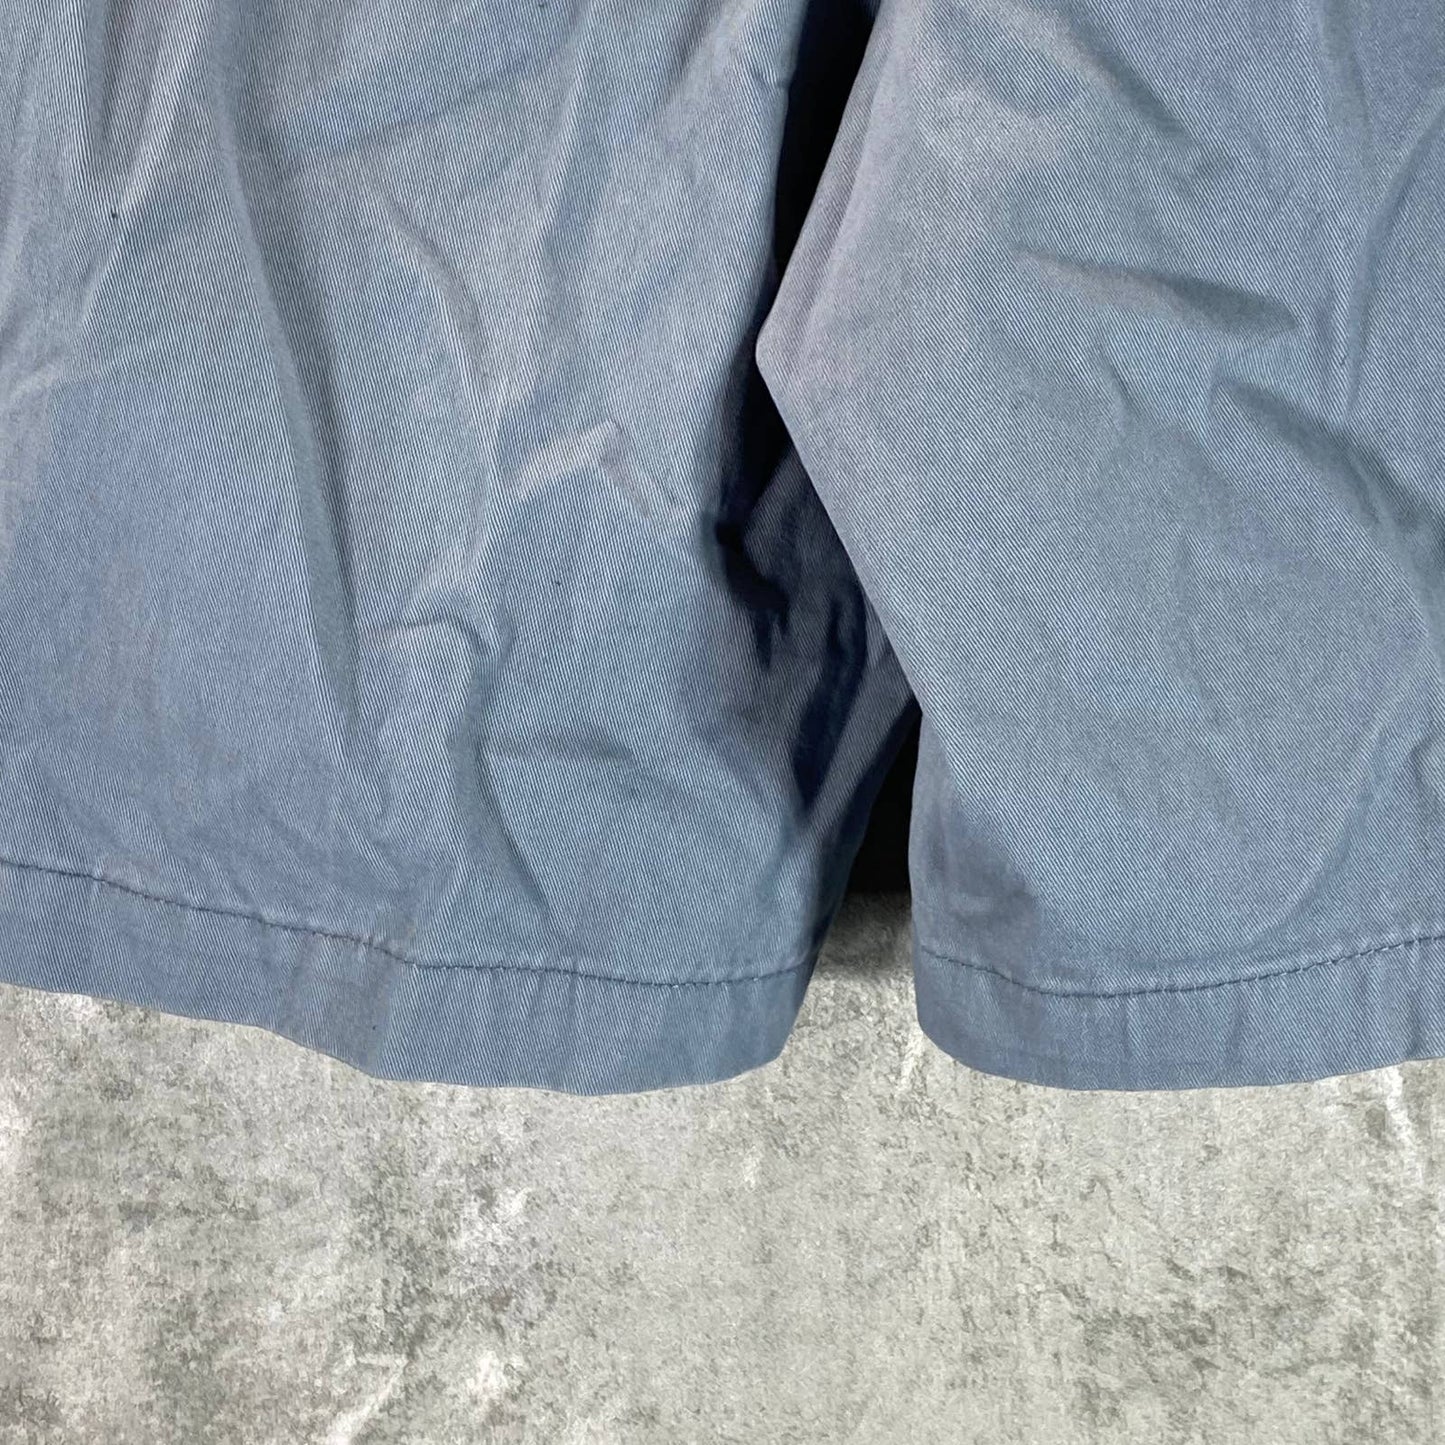 GEOFFREY BEENE Men's Blue Pleated Chino Shorts SZ 32